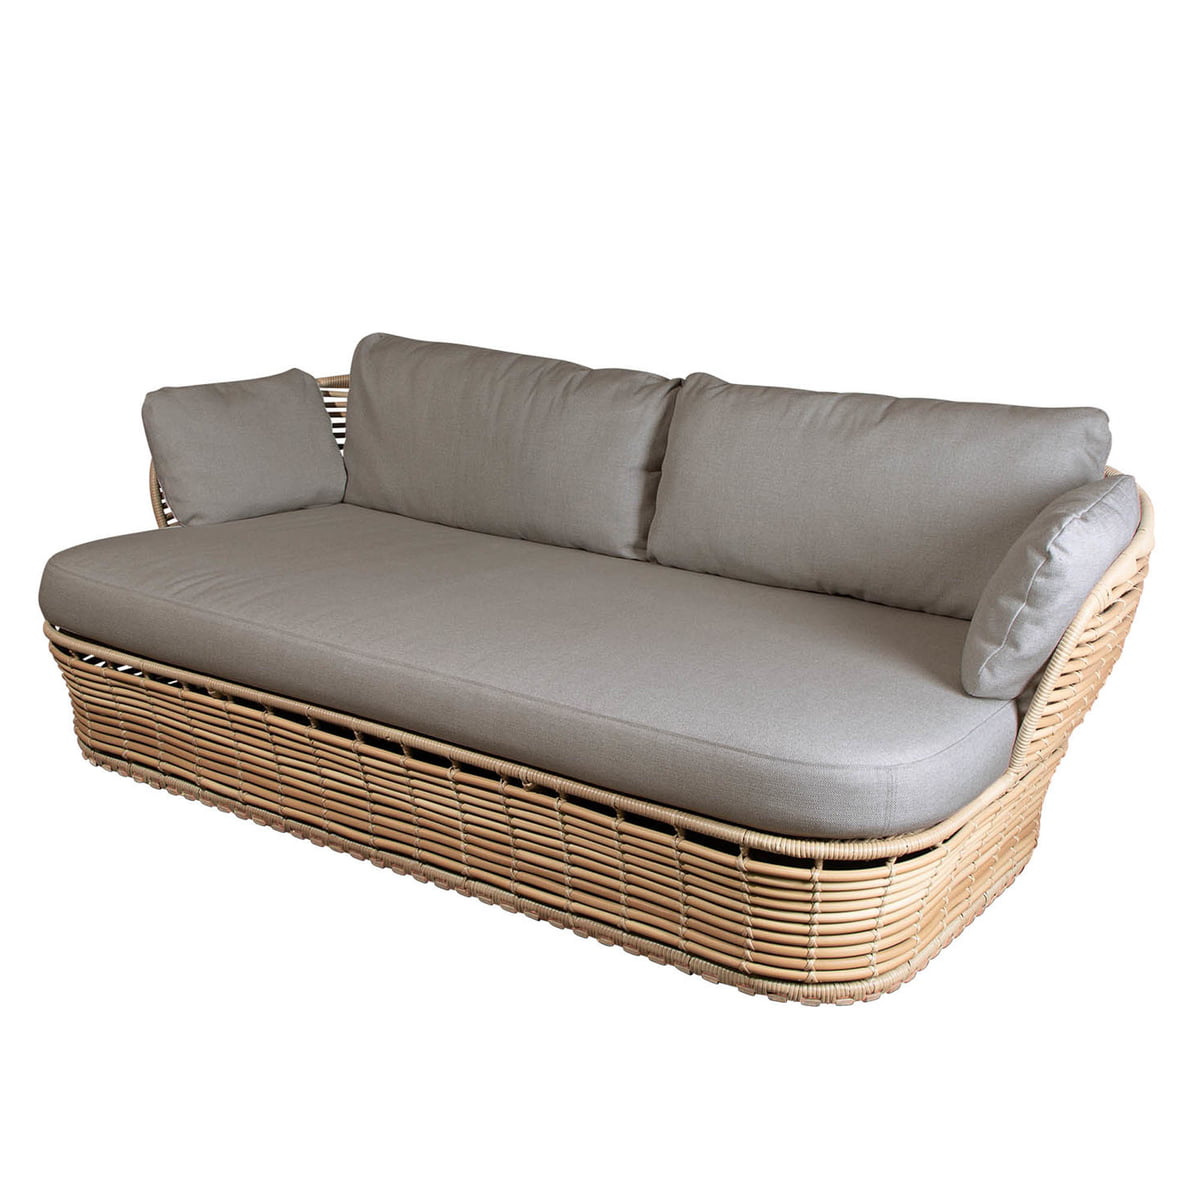 Cane line   Basket 20 Sitzer Sofa Outdoor, natural / taupe